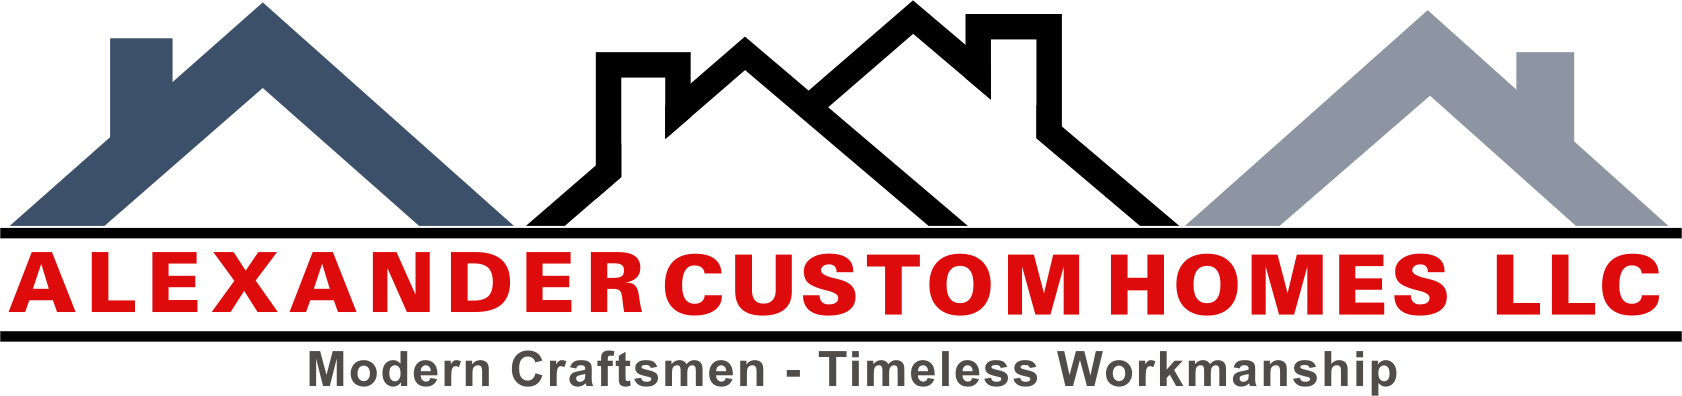 Alexander Custom Homes, LLC Logo